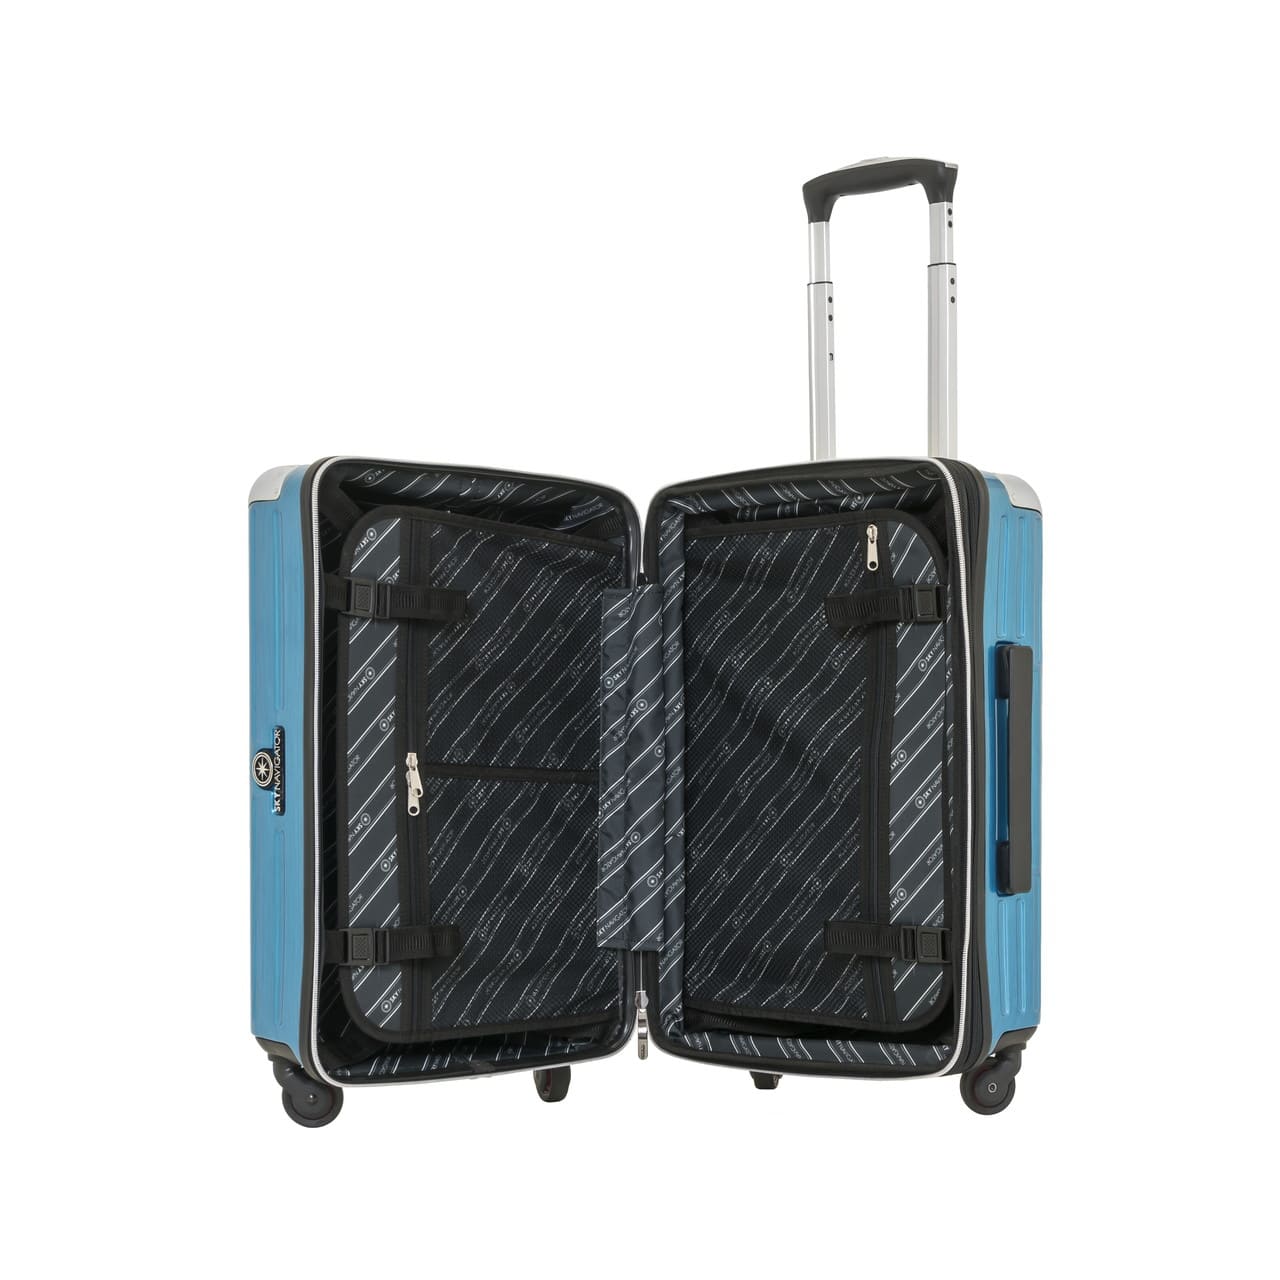 SKYNAVIGATORのスーツケースSK-0739-50のブルーヘアラインの内装